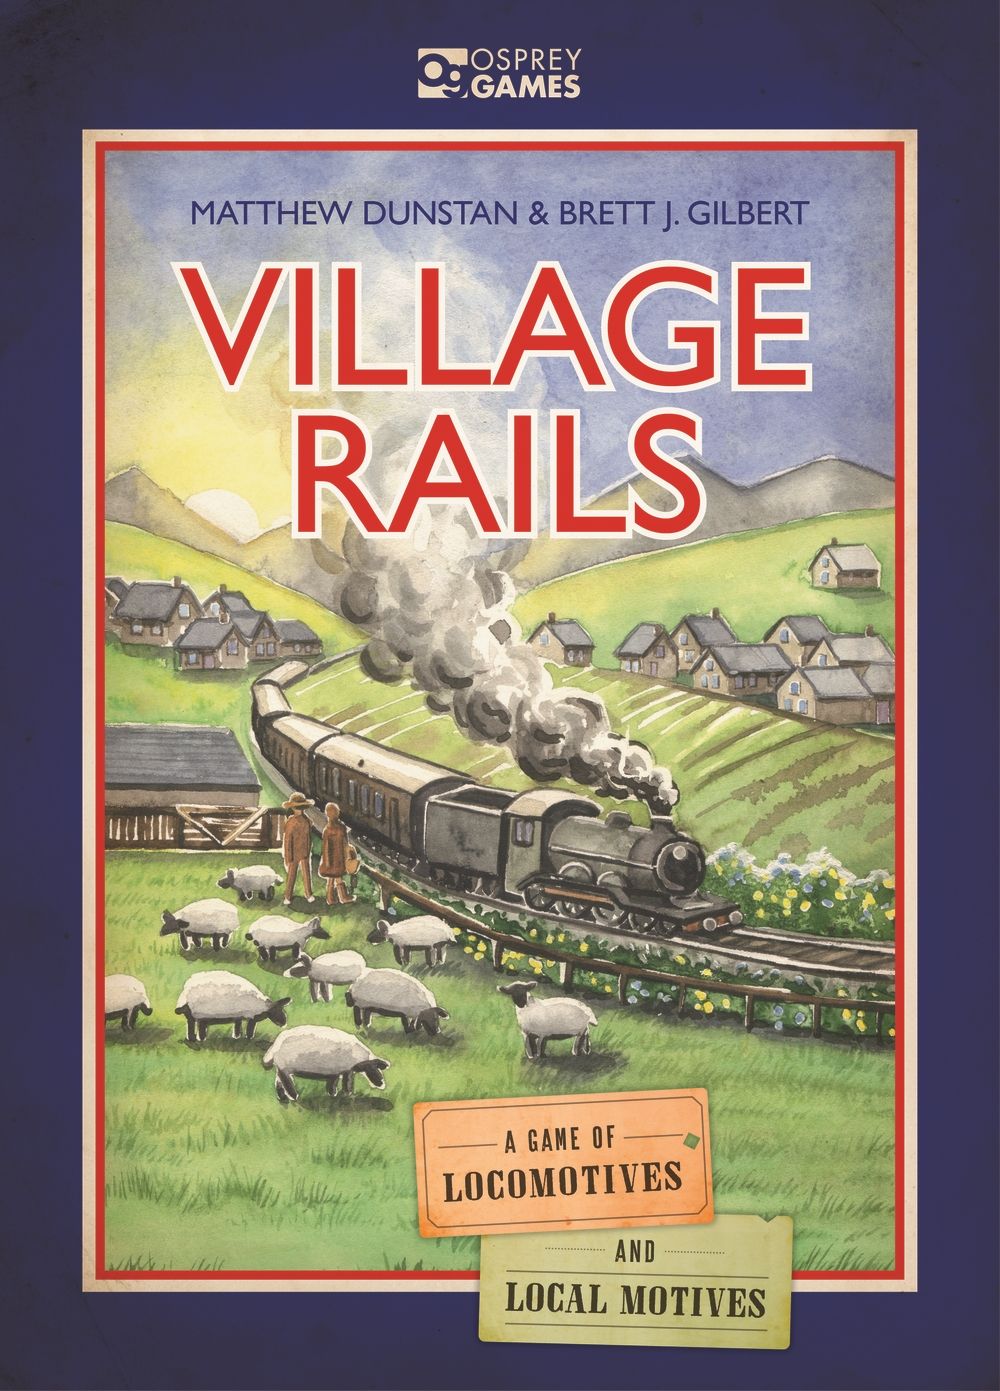 village rails box art